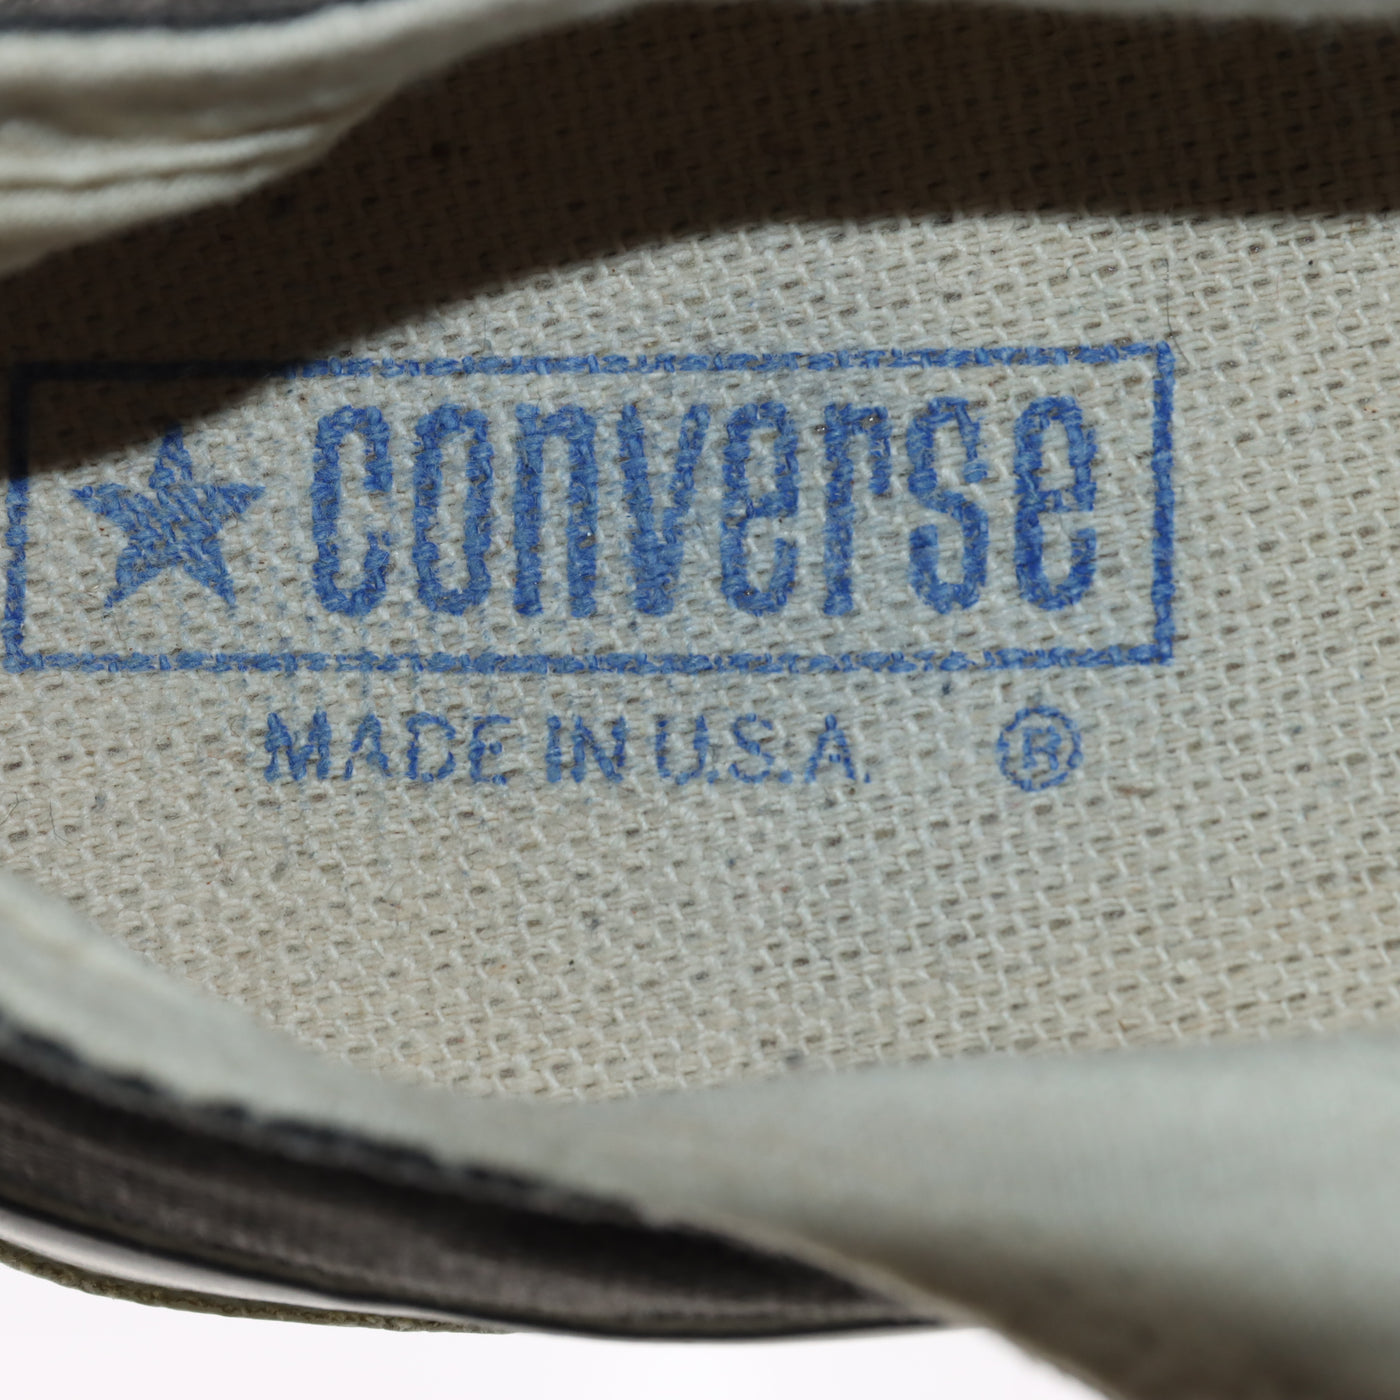 Converse All Star Alte Nero Eur 37 Unisex Made in USA